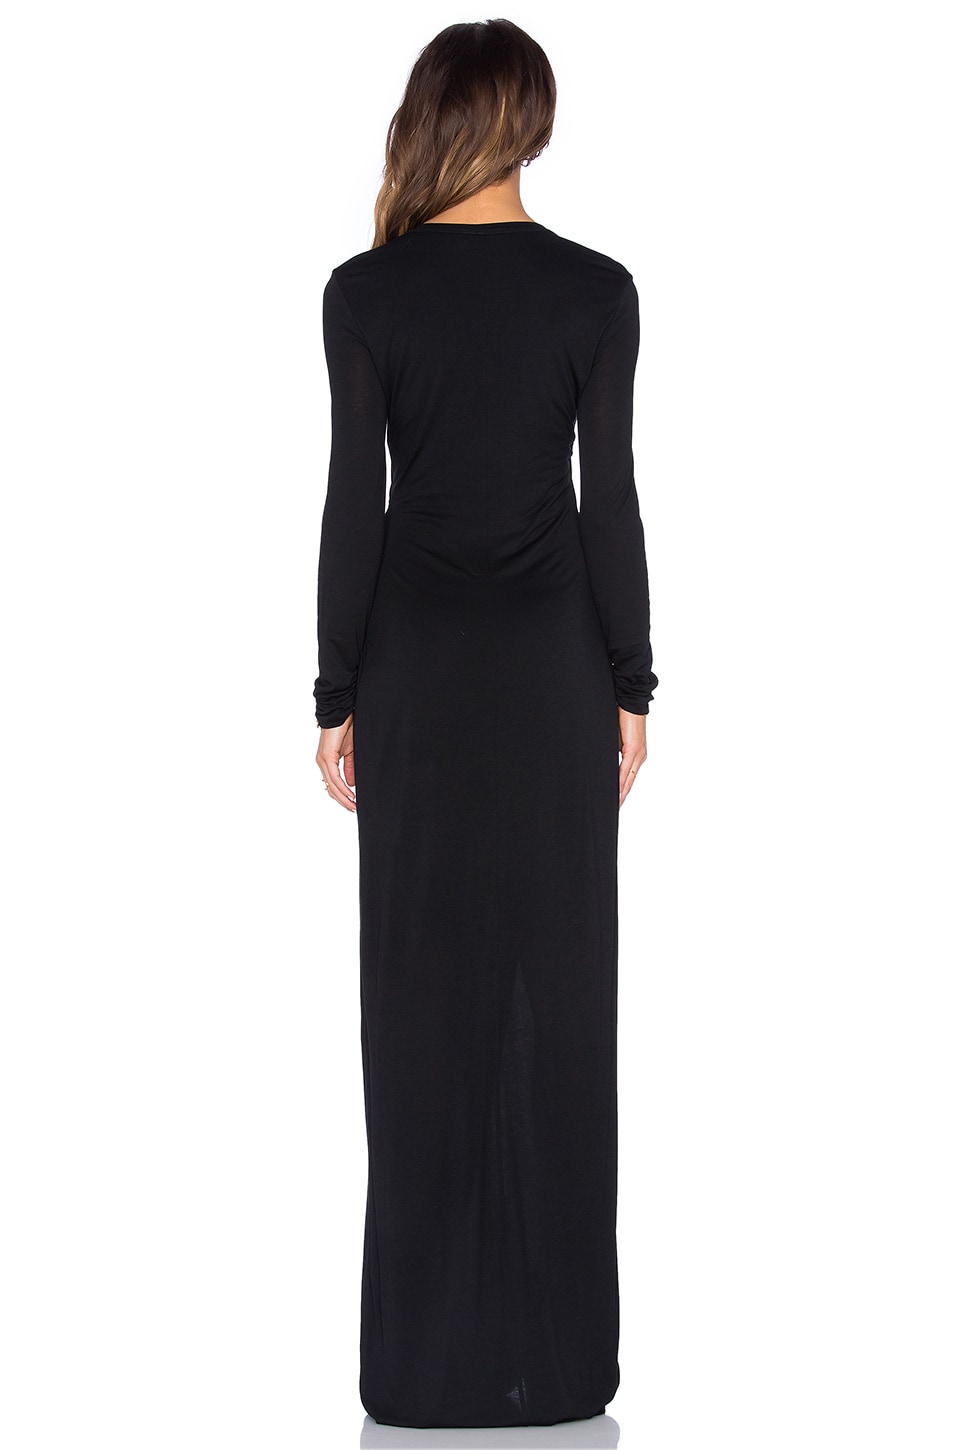 A.L.C. Vincent Dress in Black | REVOLVE